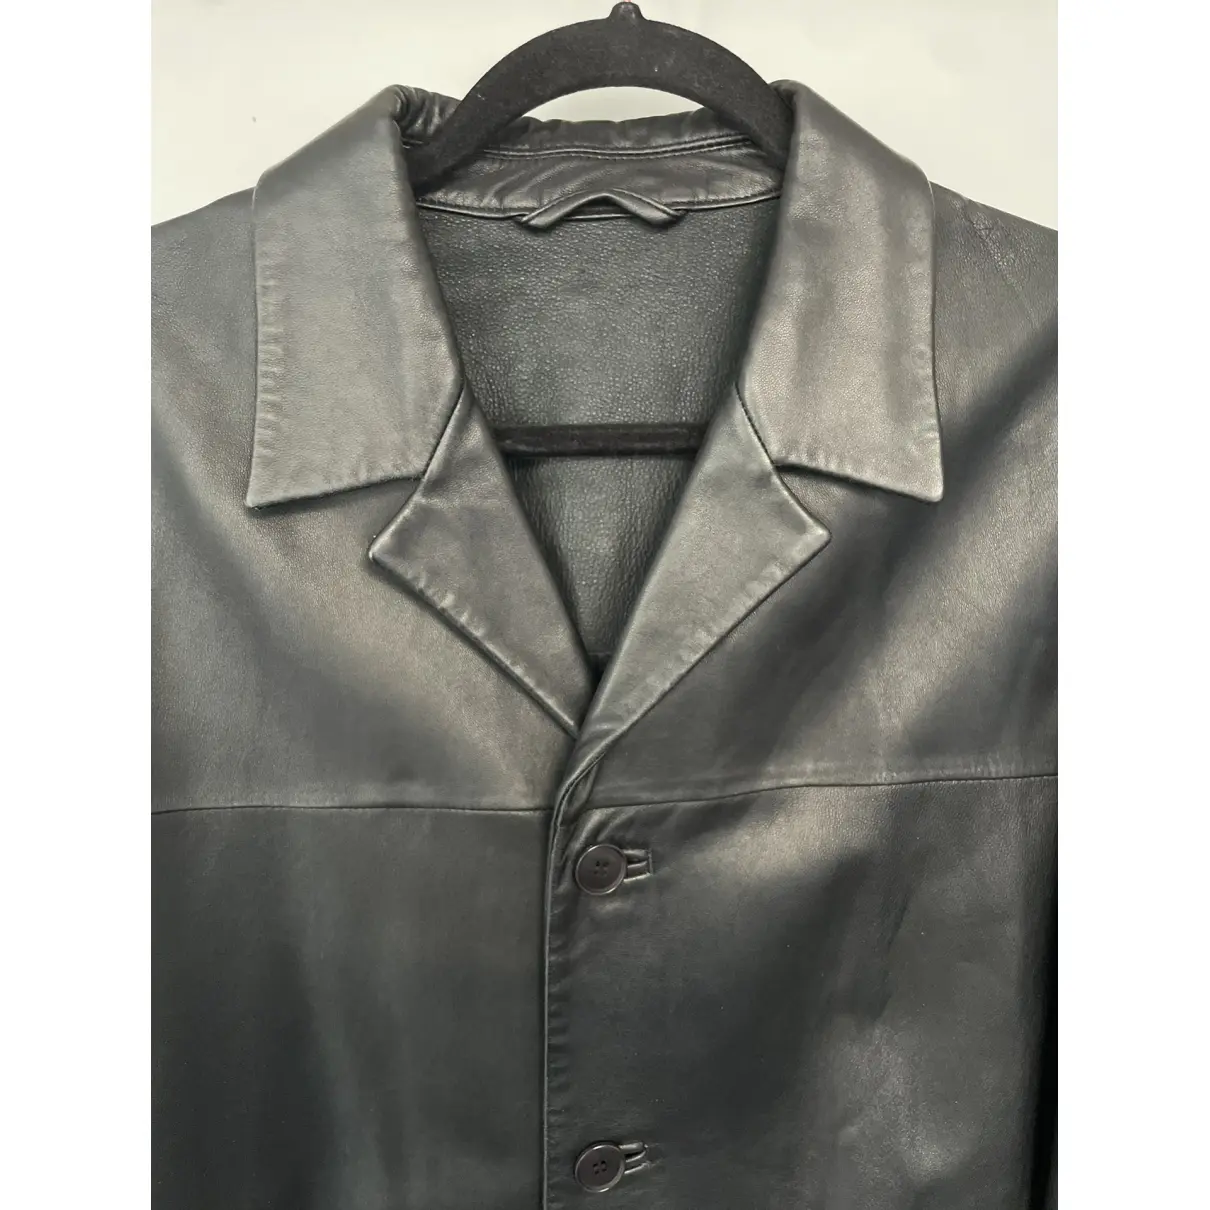 Buy Boss Leather jacket online